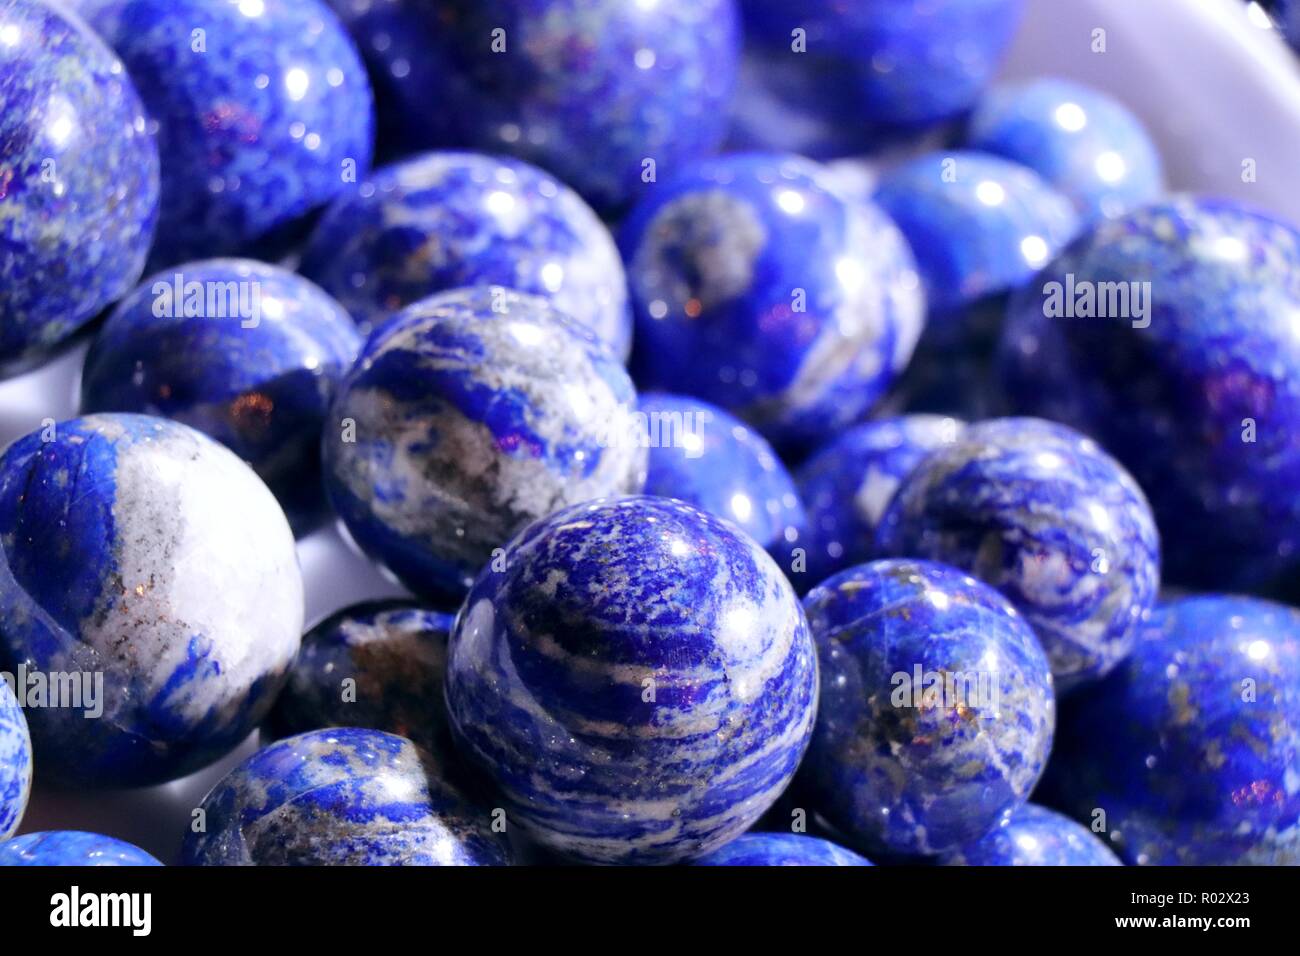 Cobalt blue lapis lazuli balls with white veins. Stock Photo